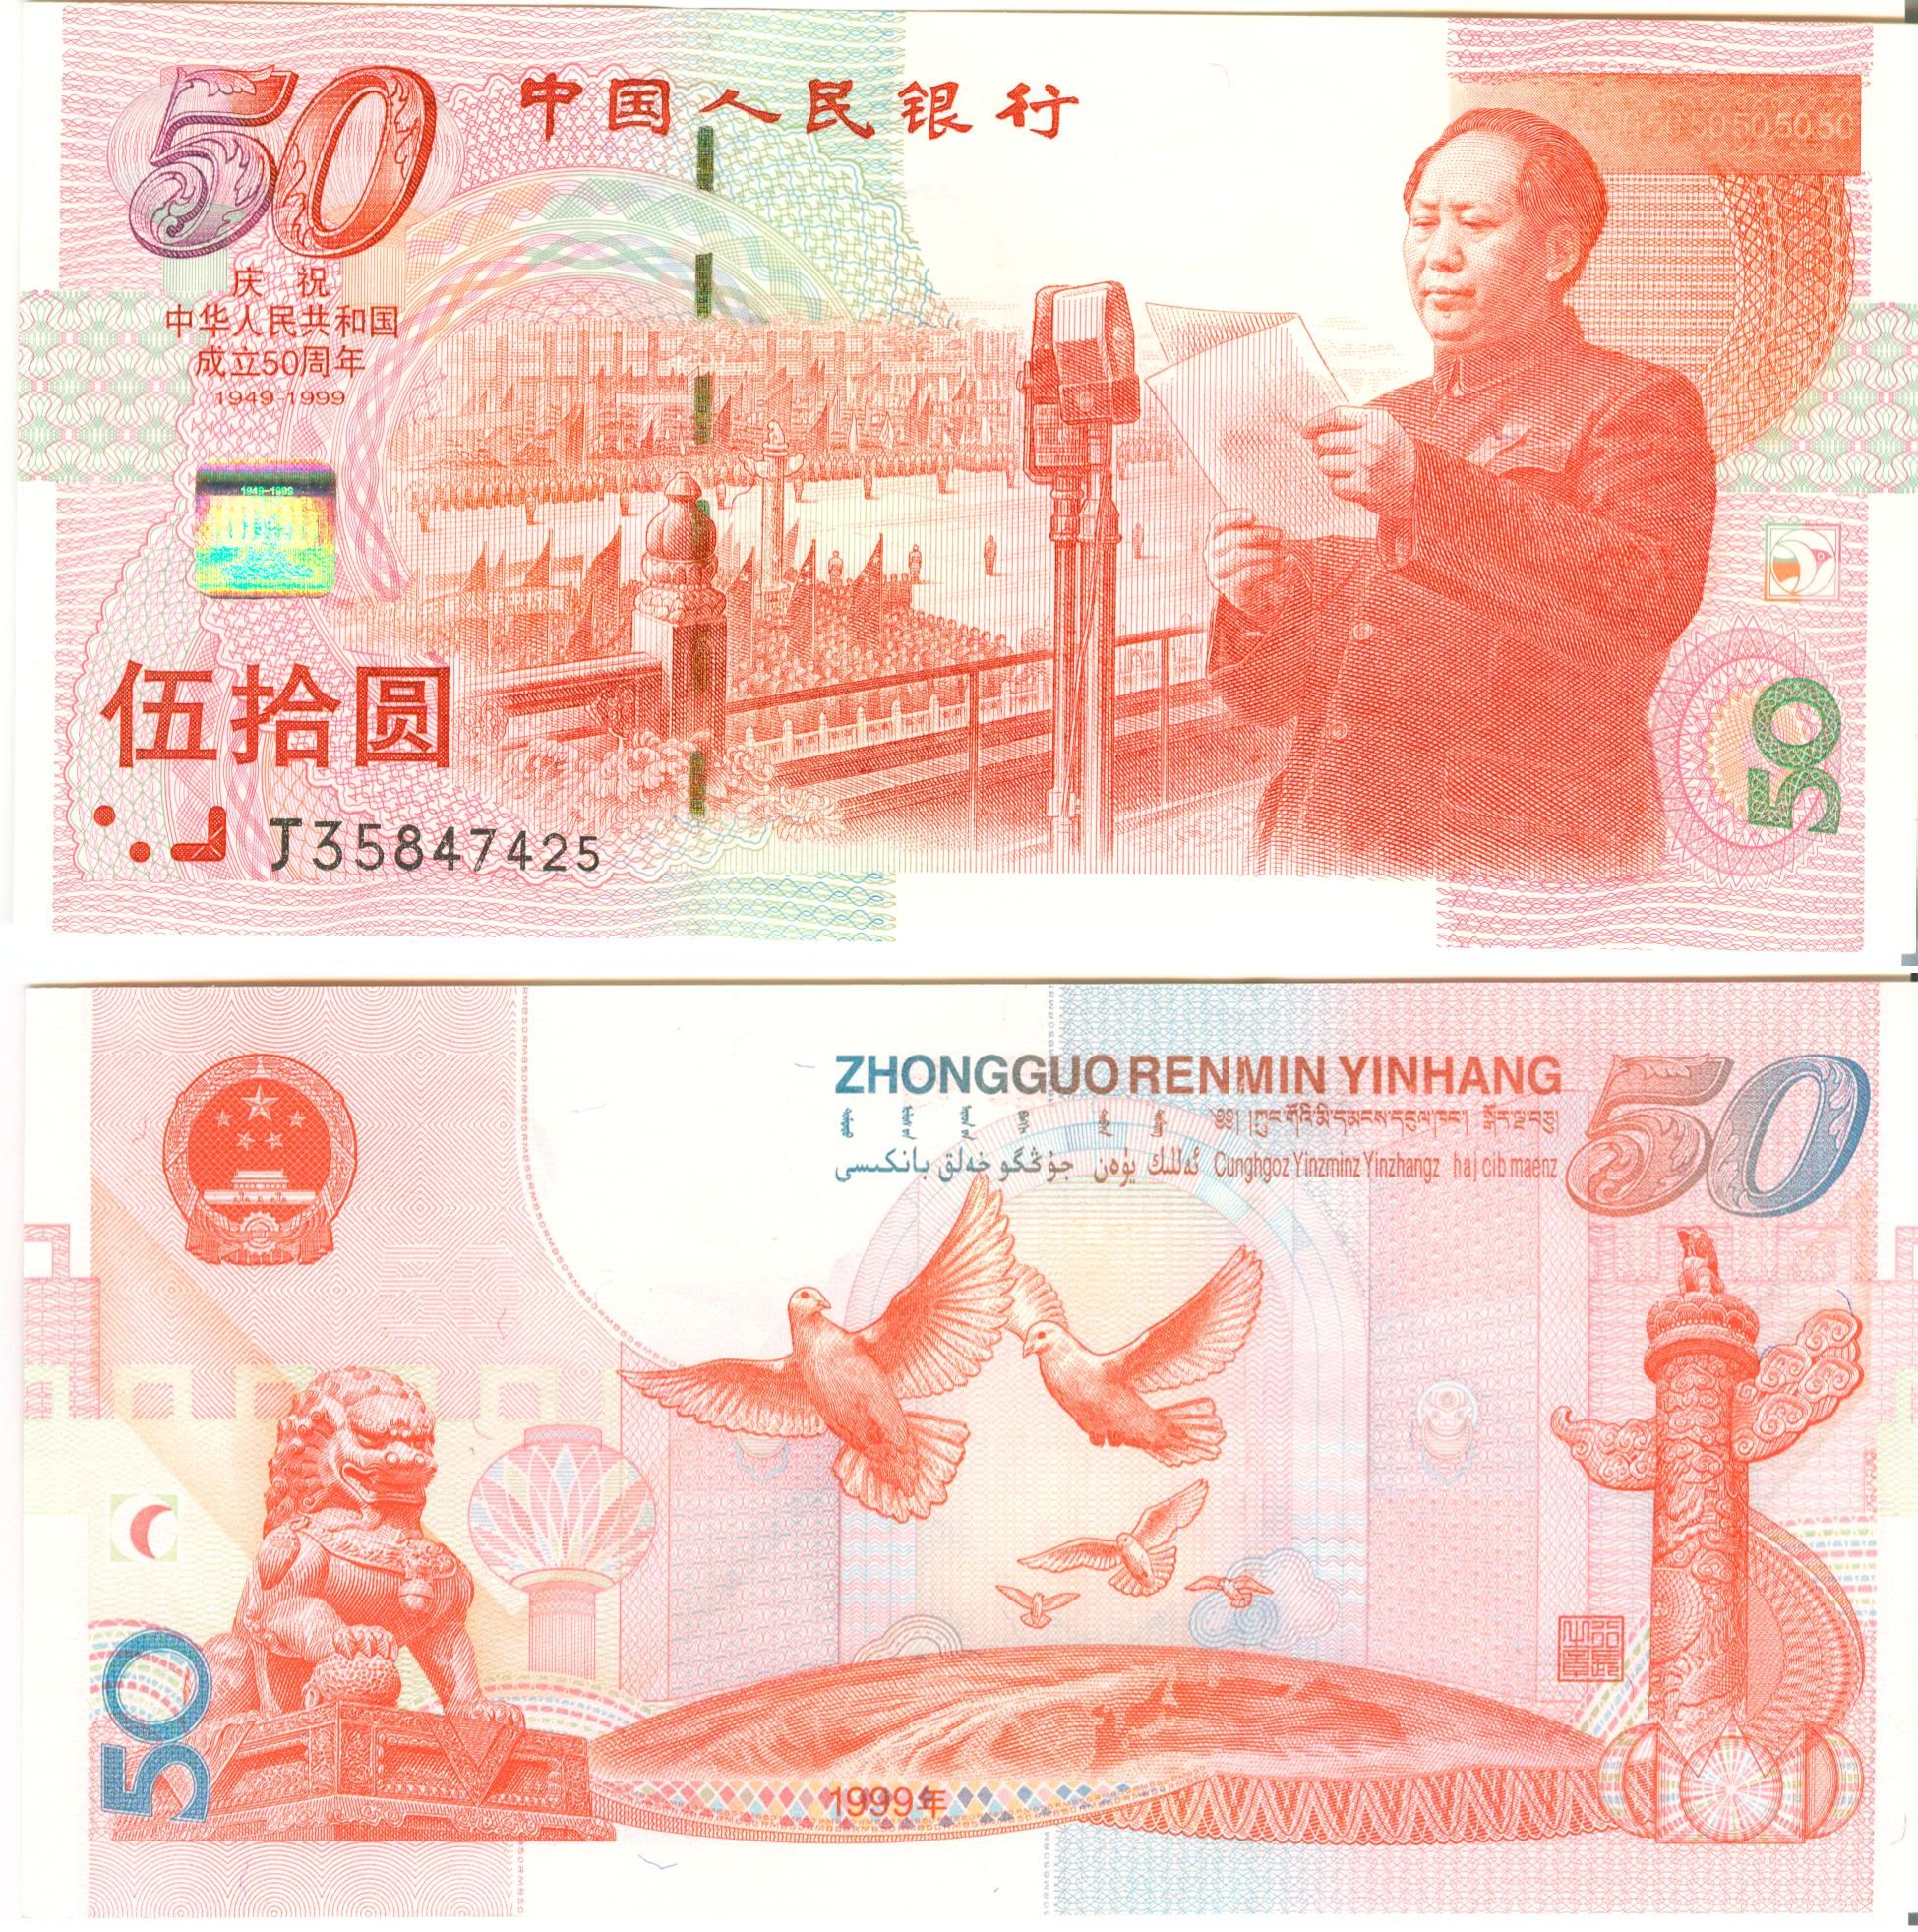 N0150, China First Commemorative Banknote 50 Yuan,1999, P-891